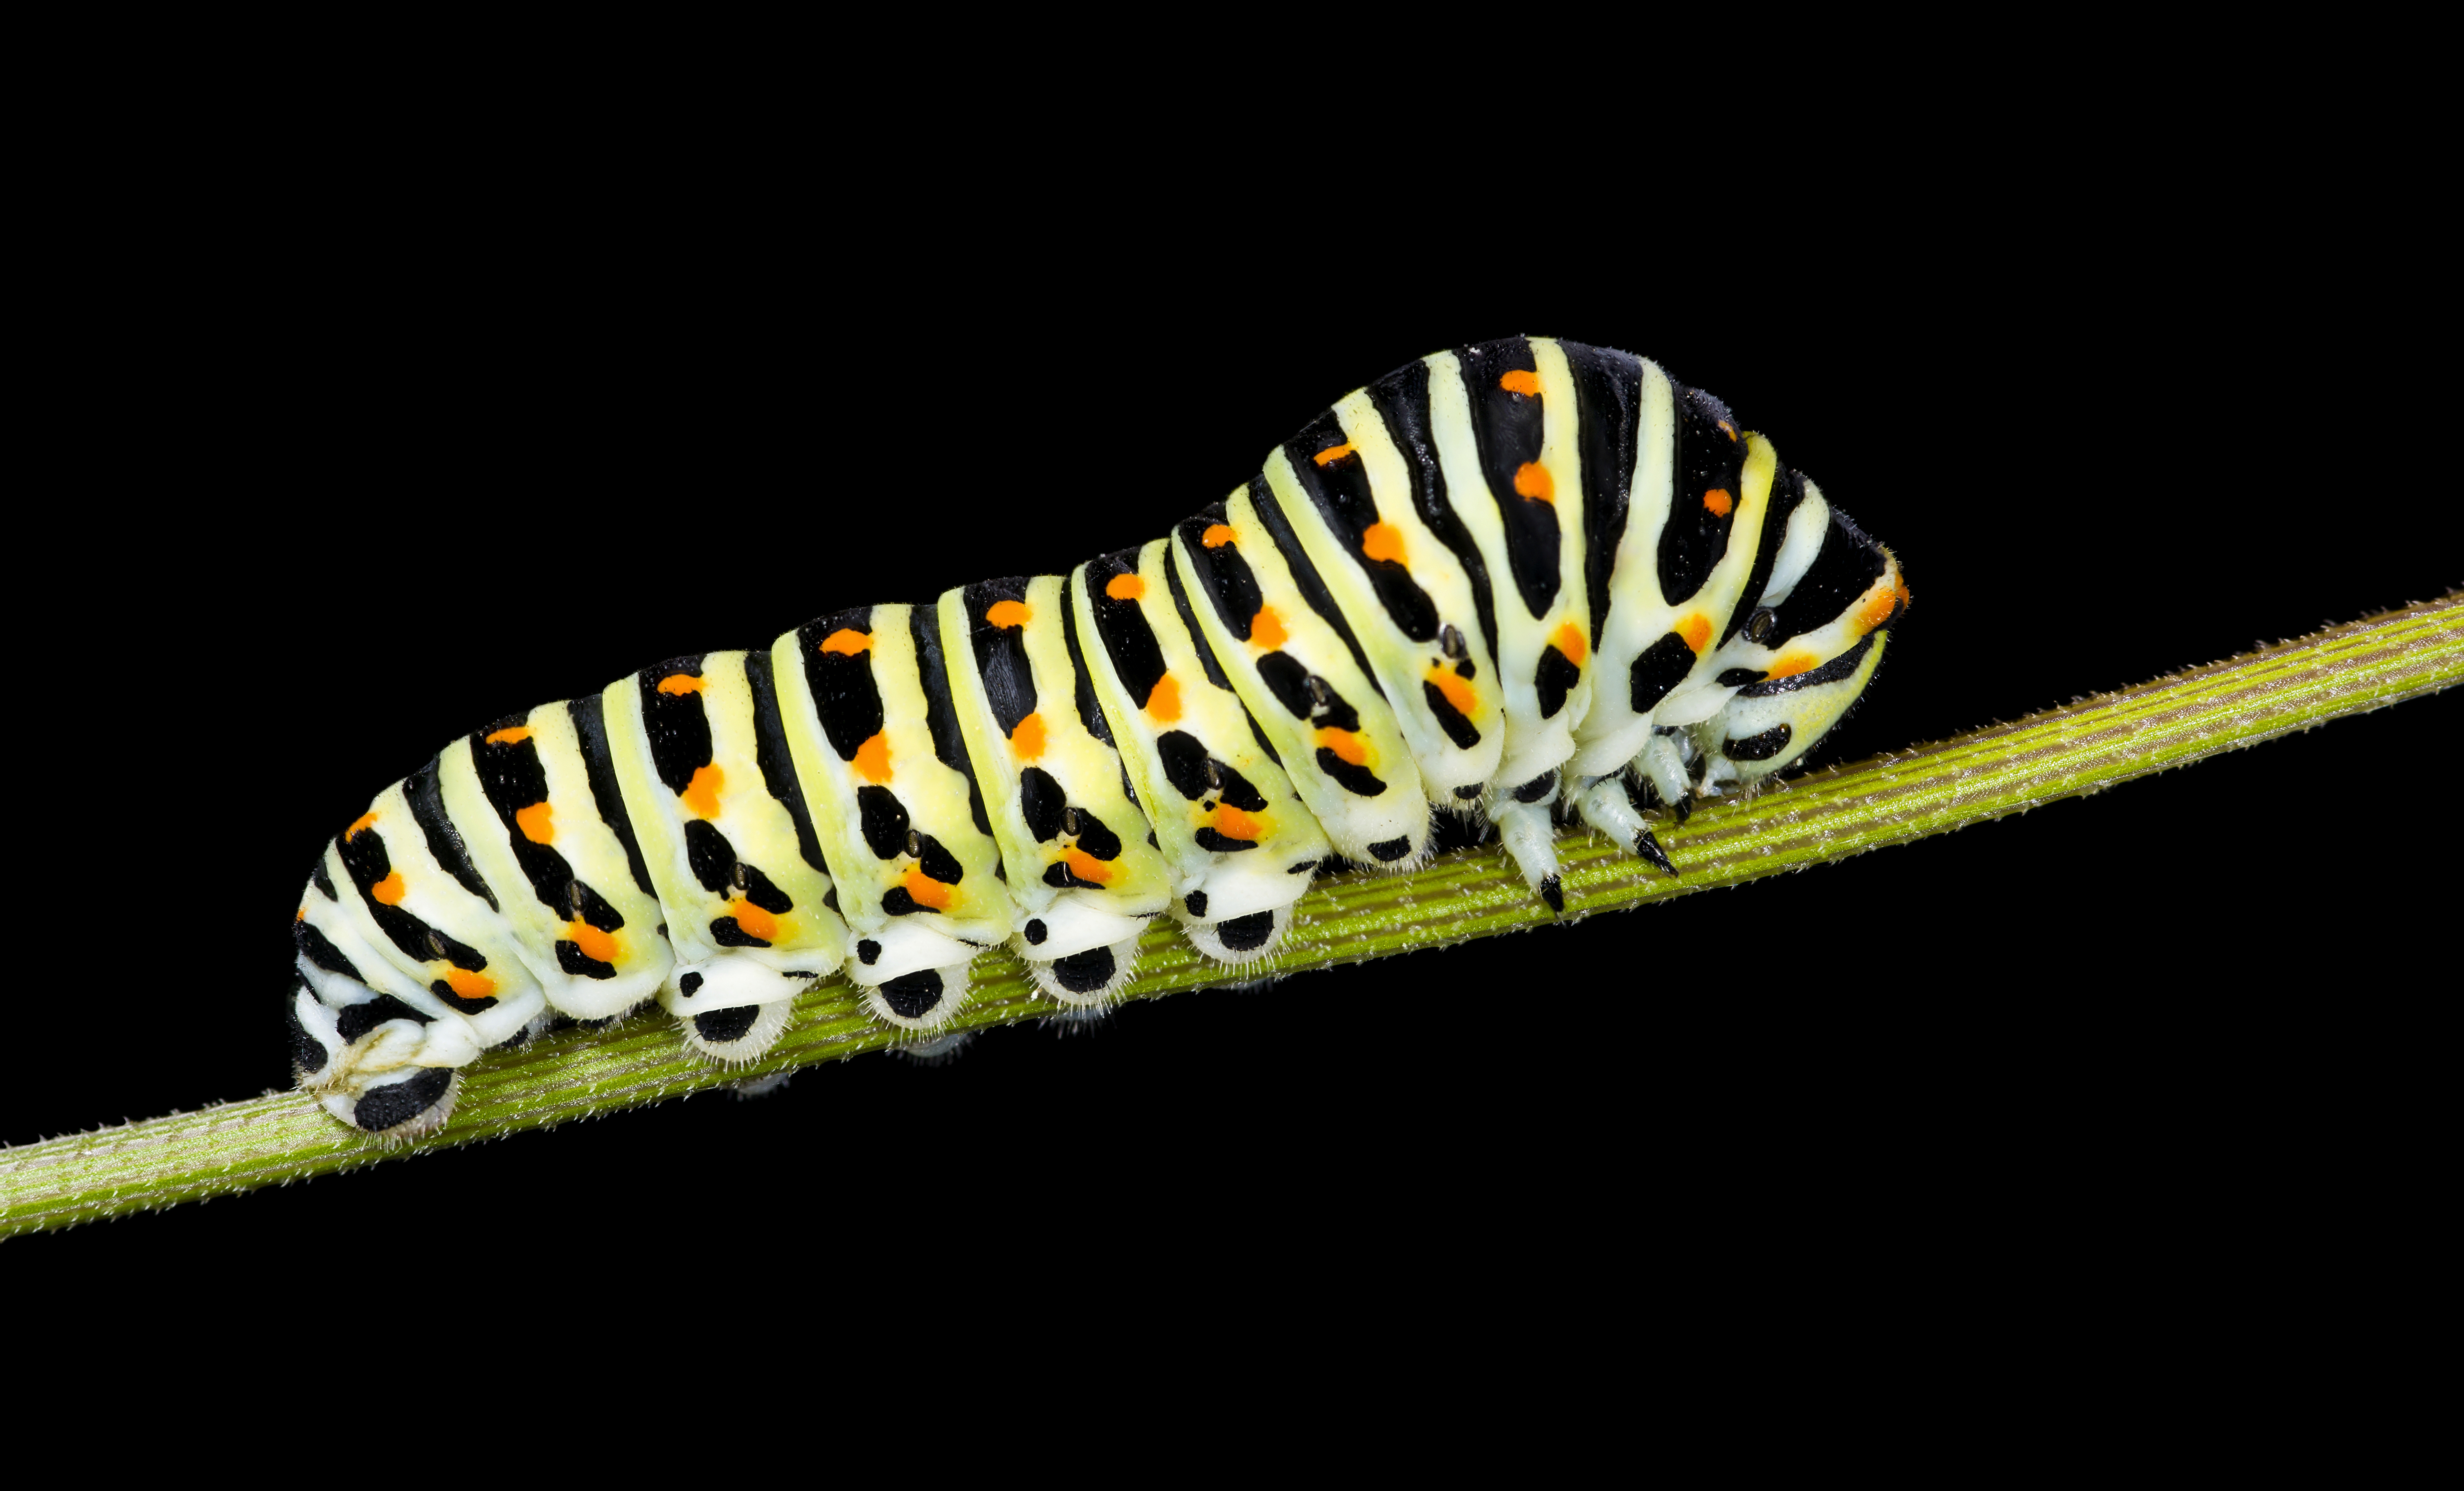 Caterpillar Wikipedia